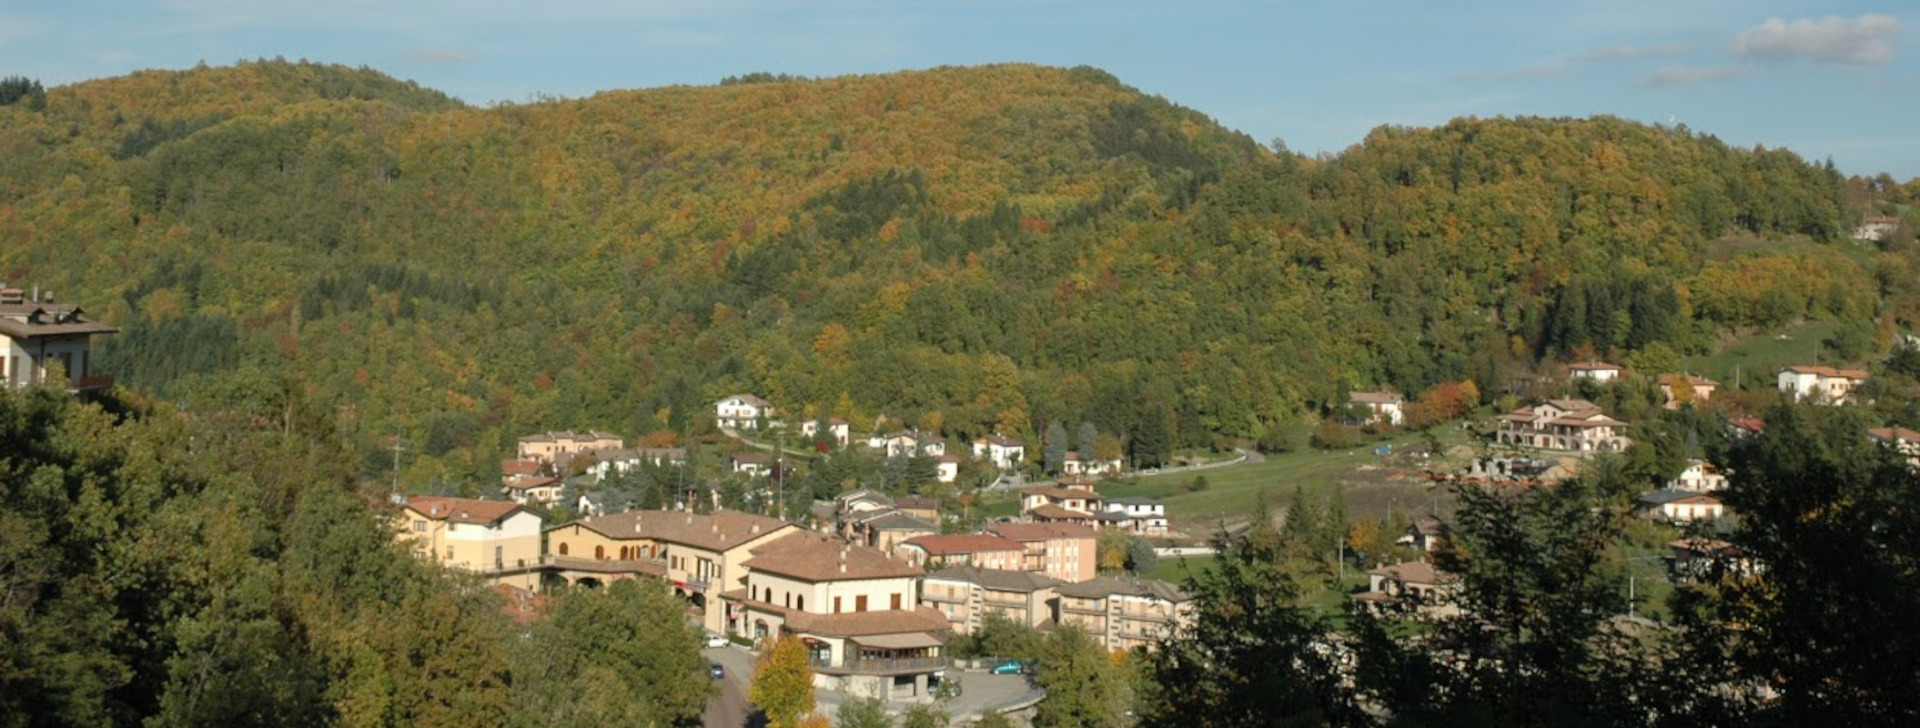 Immagine di Castel d'Aiano